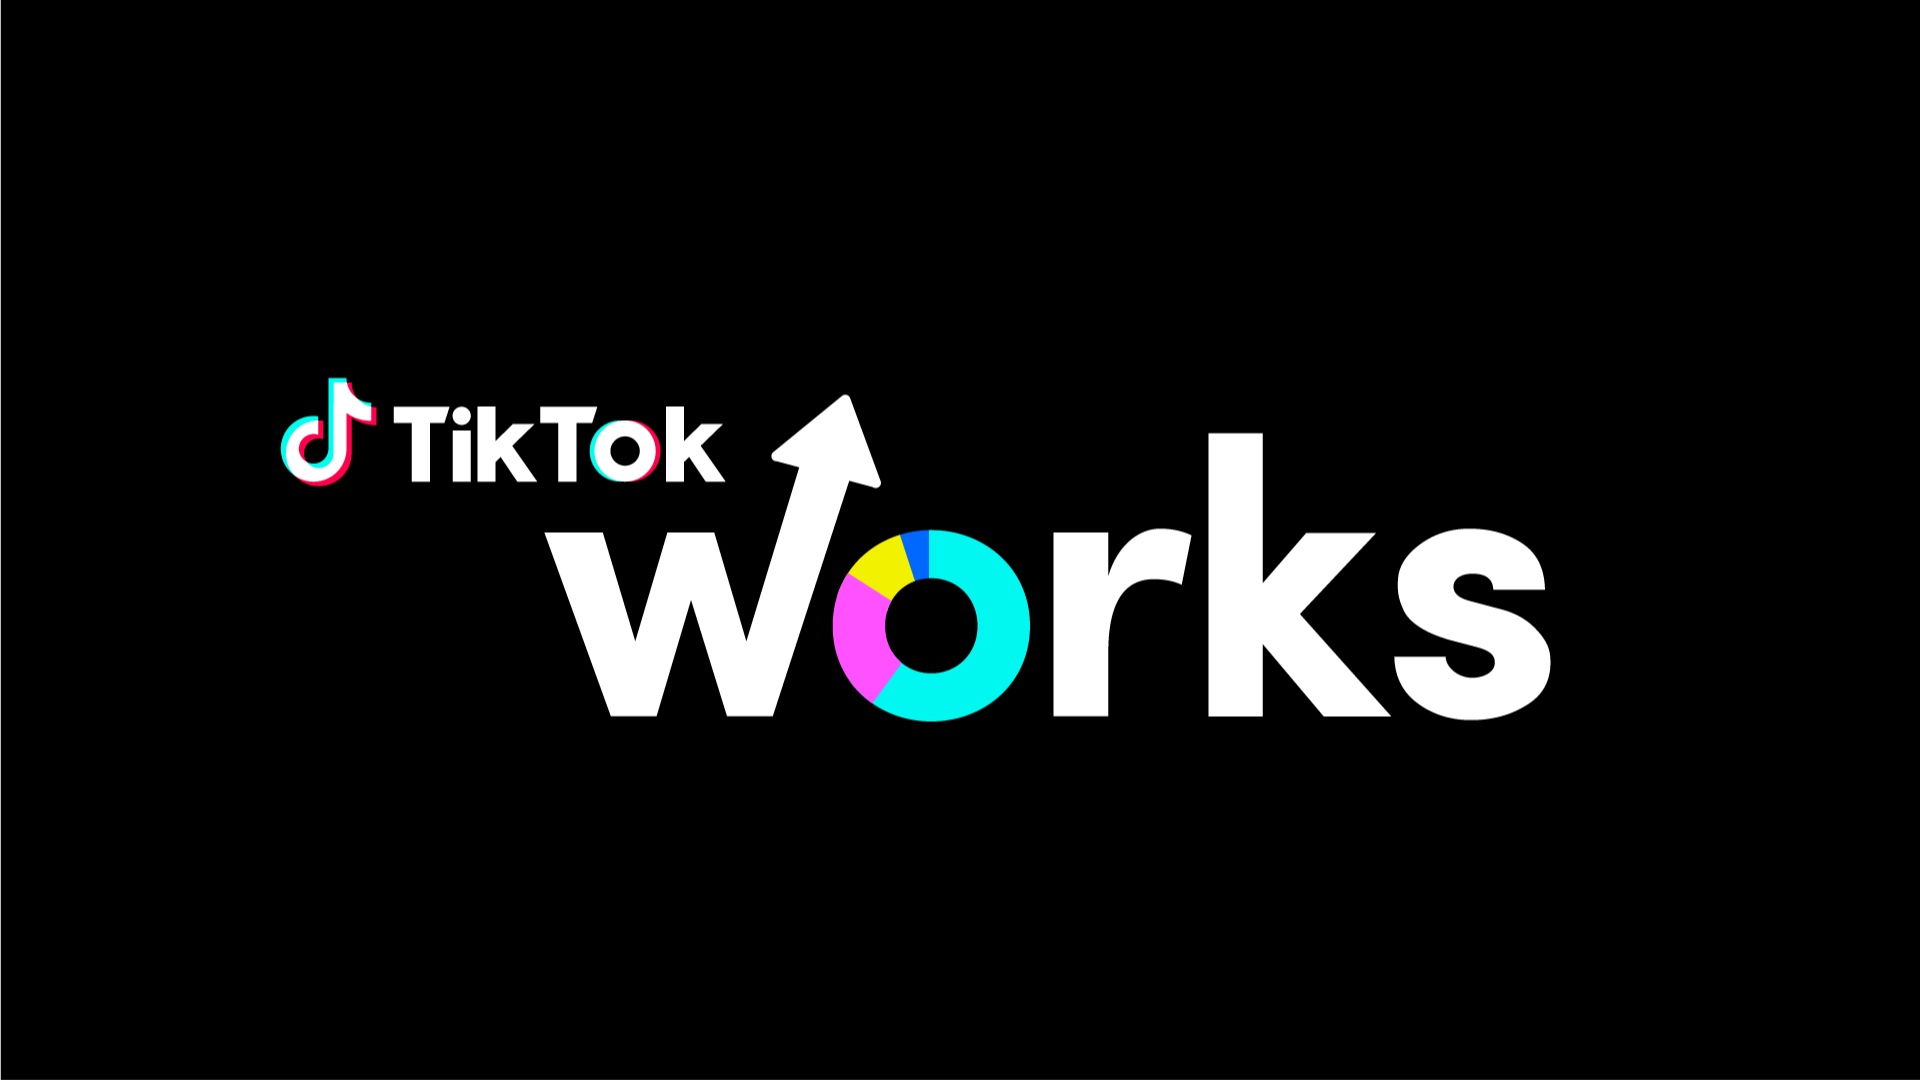 TikTok advertising benefits small businesses